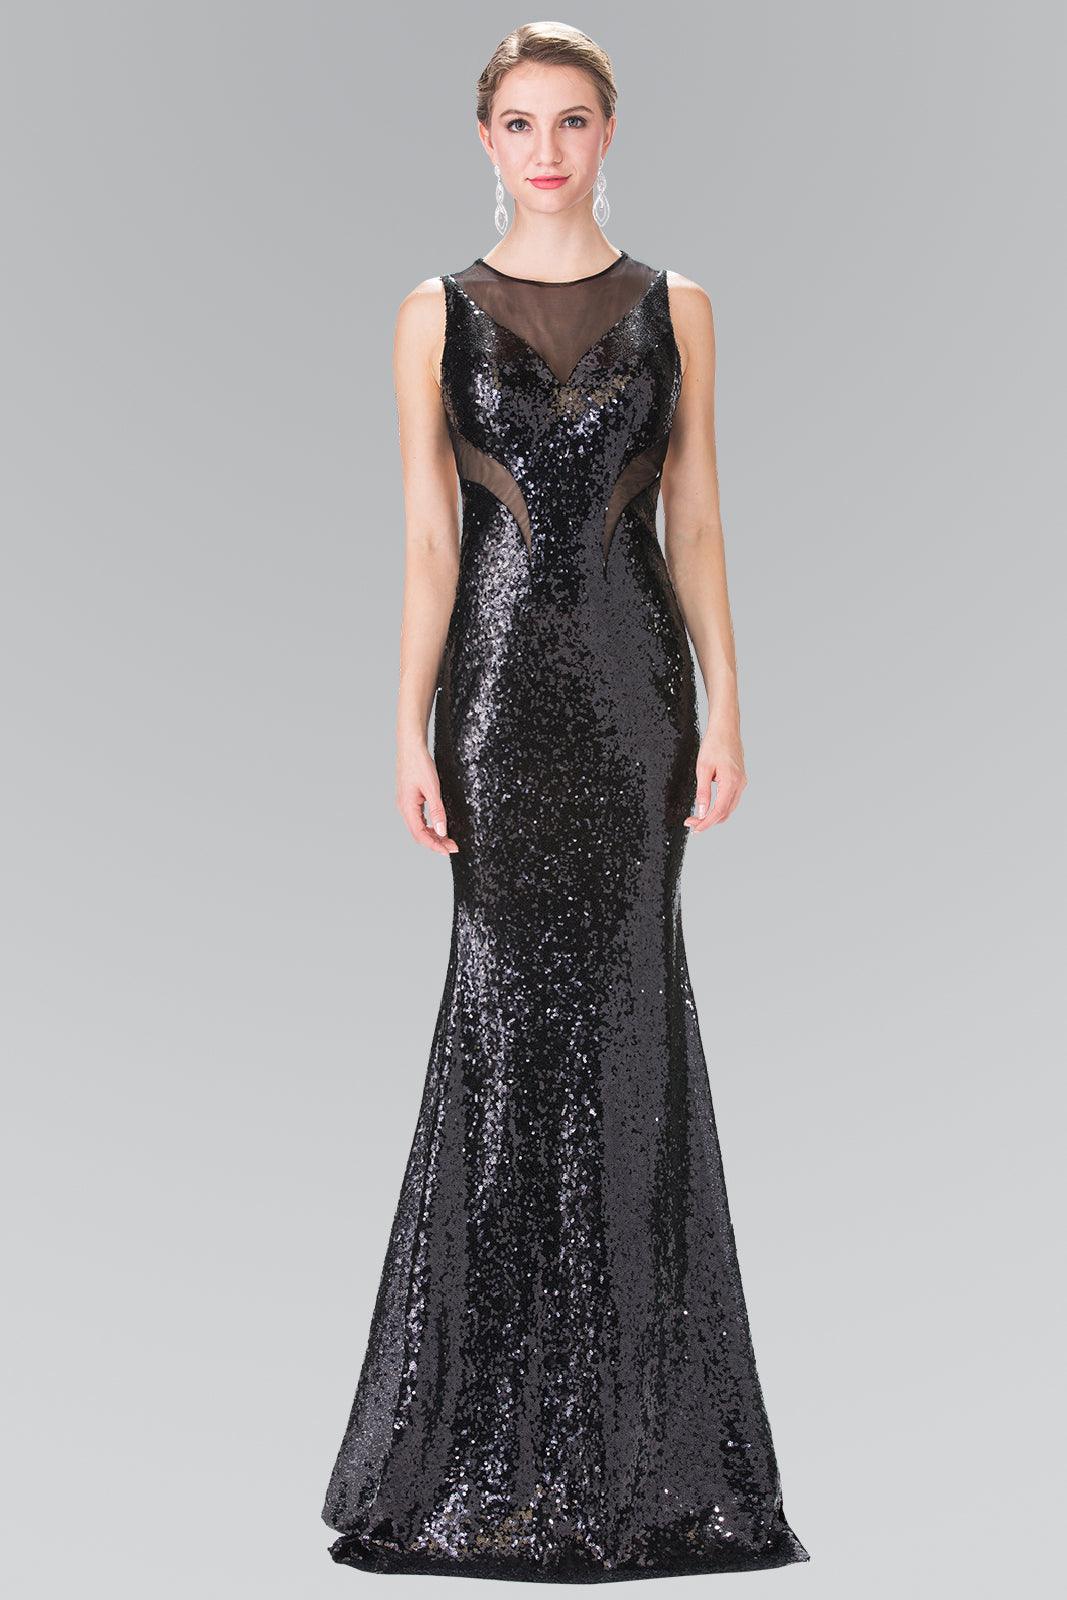 Long Fully Sequins Gown Prom Dress Formal - The Dress Outlet Elizabeth K